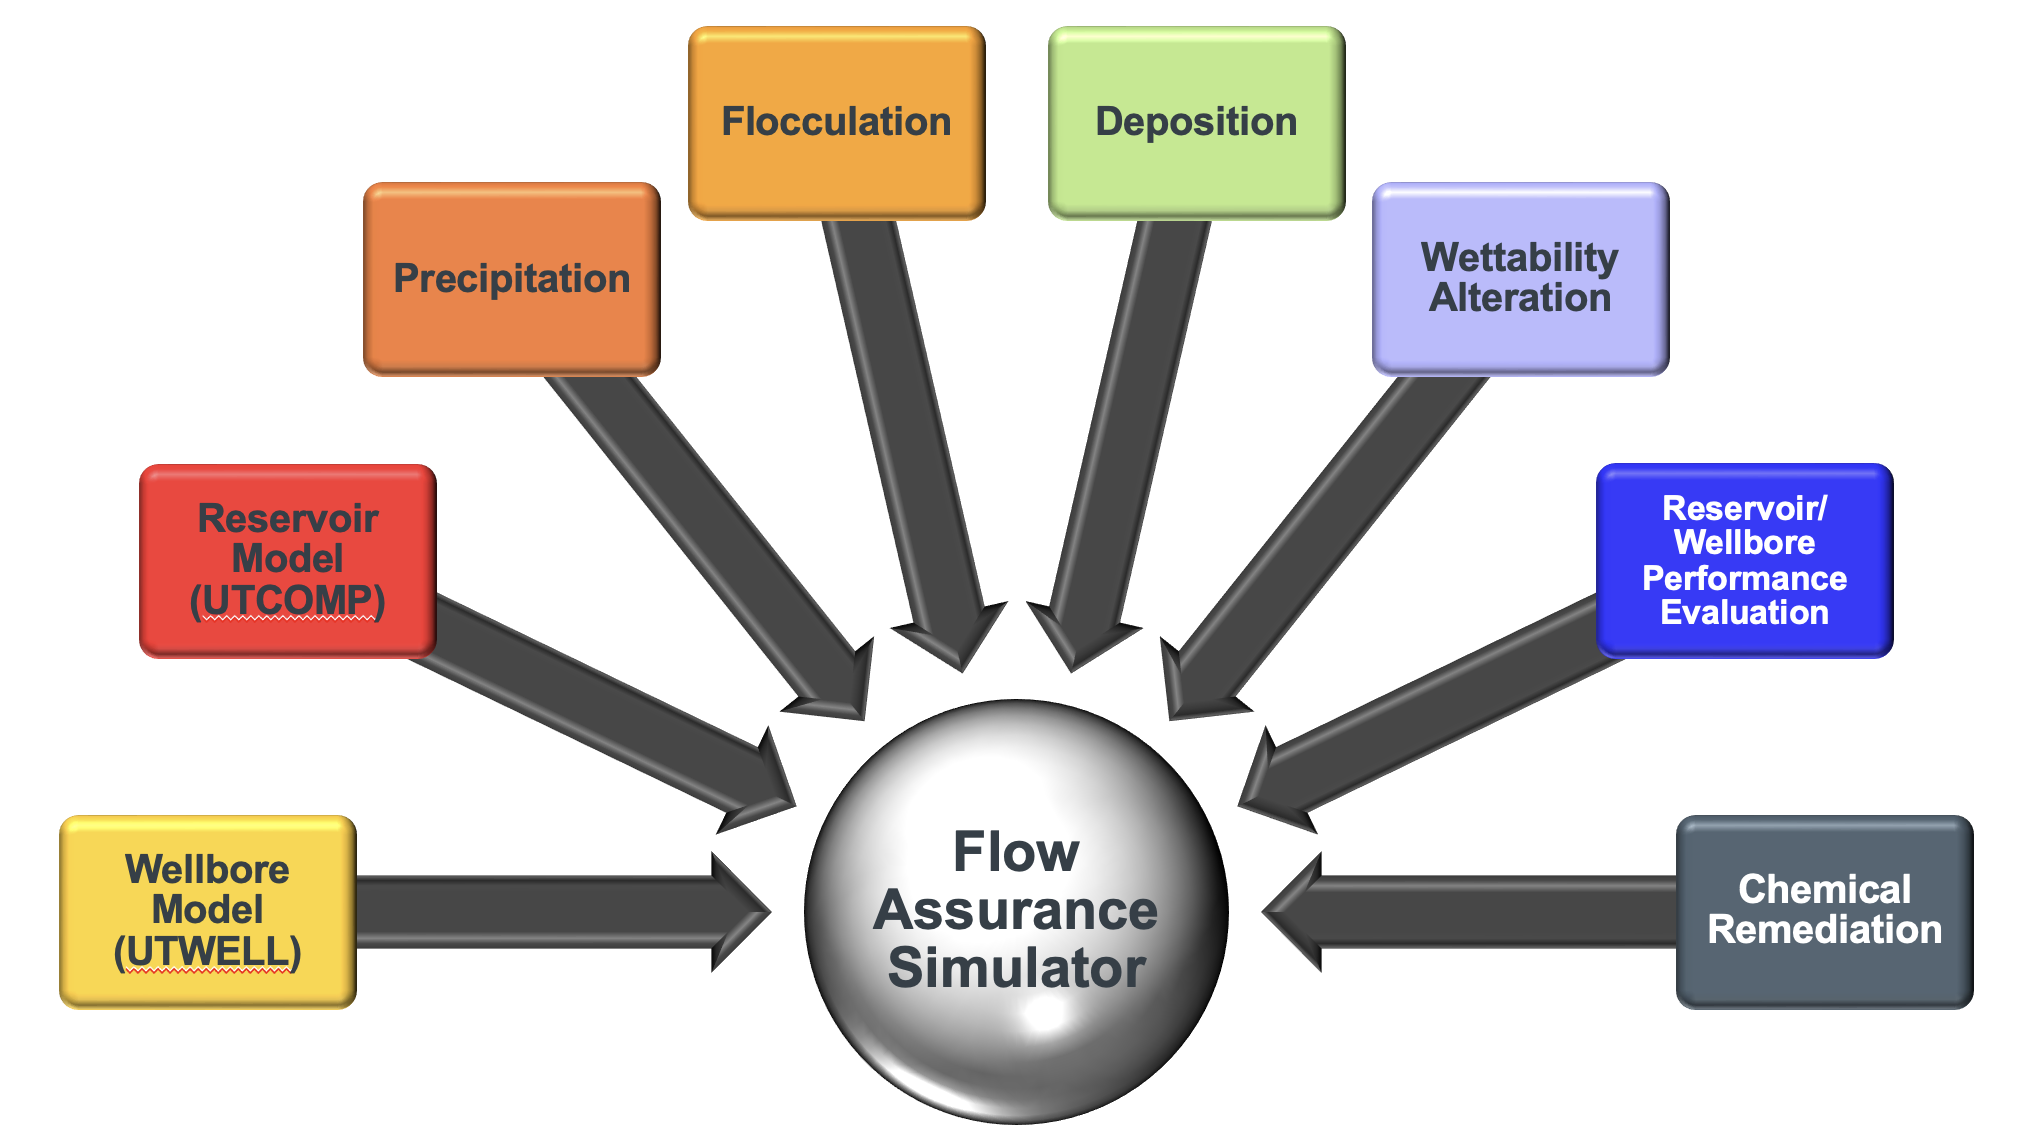 Flow assurance Simulator